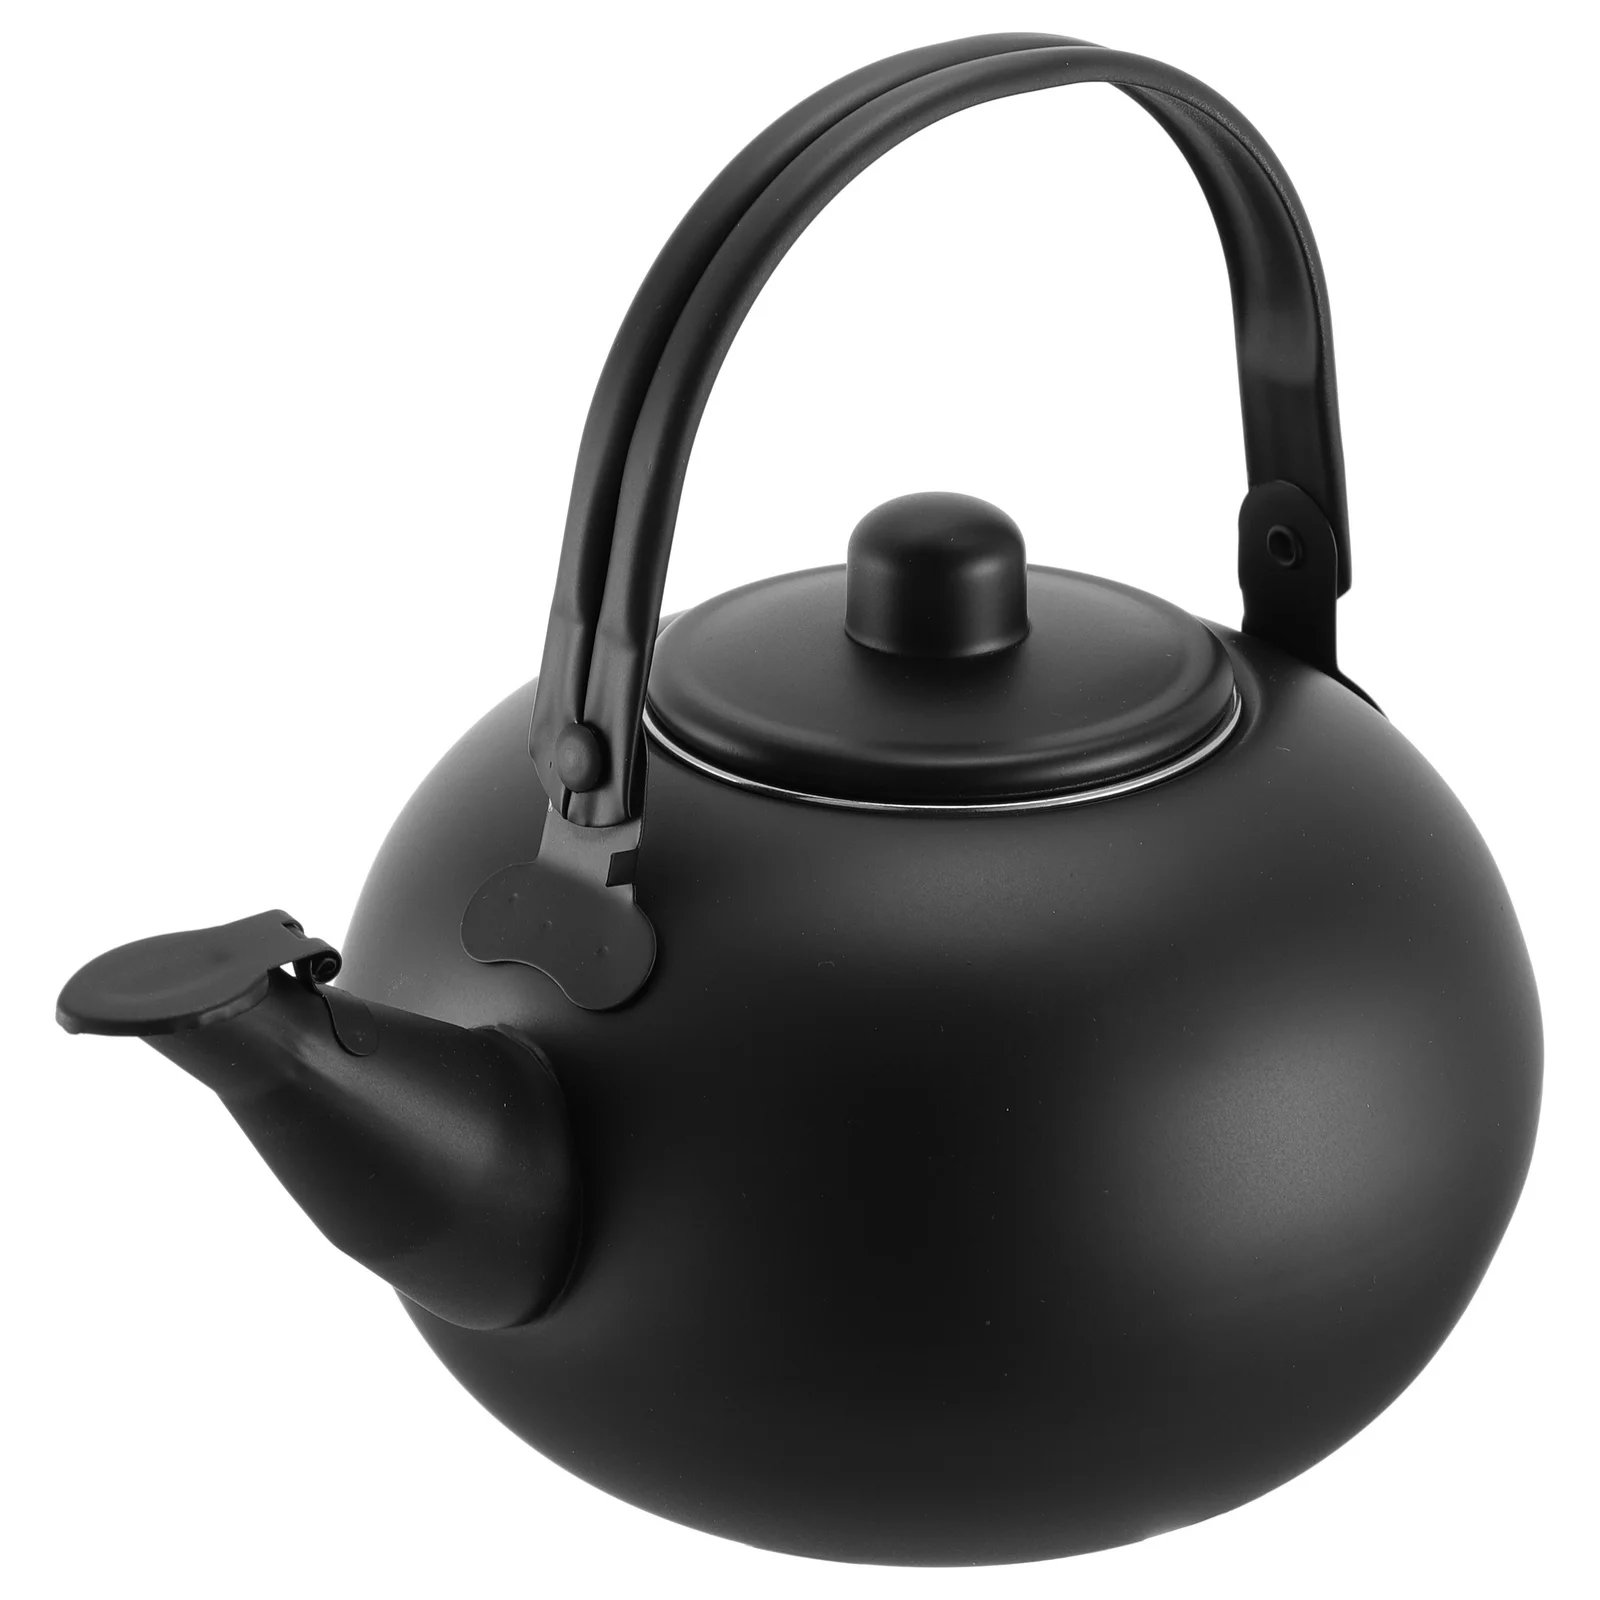 

Gas Water Heater Pot Teapot Boiling Kettle Household Teakettle 19X16X13CM Black Stainless Steel Make